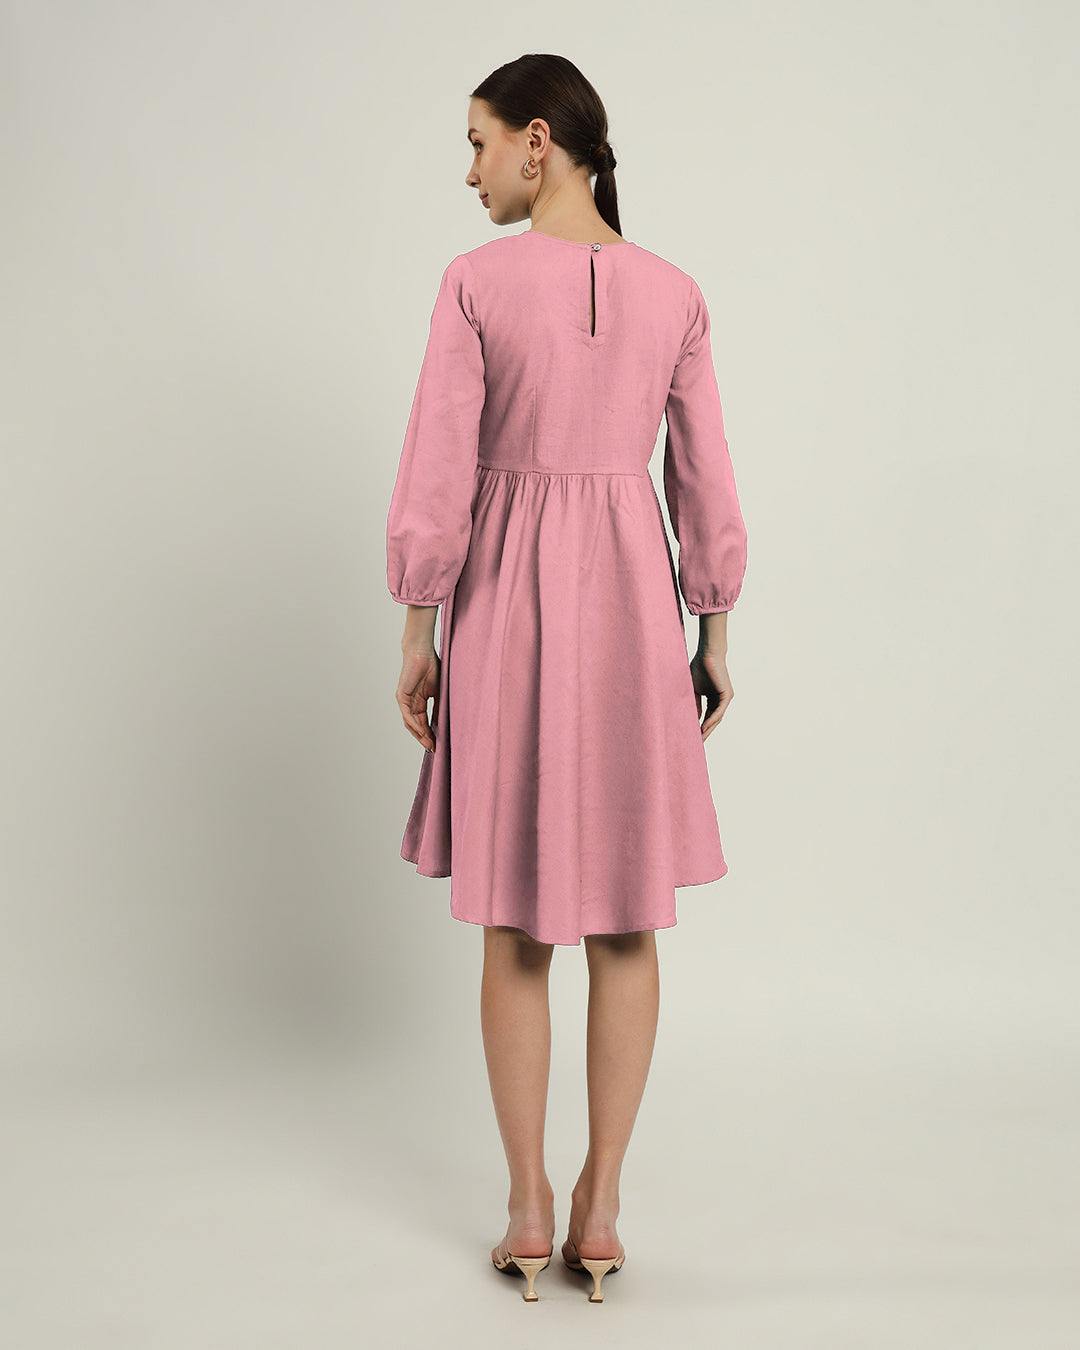 The Exeter Fondant Pink Cotton Dress